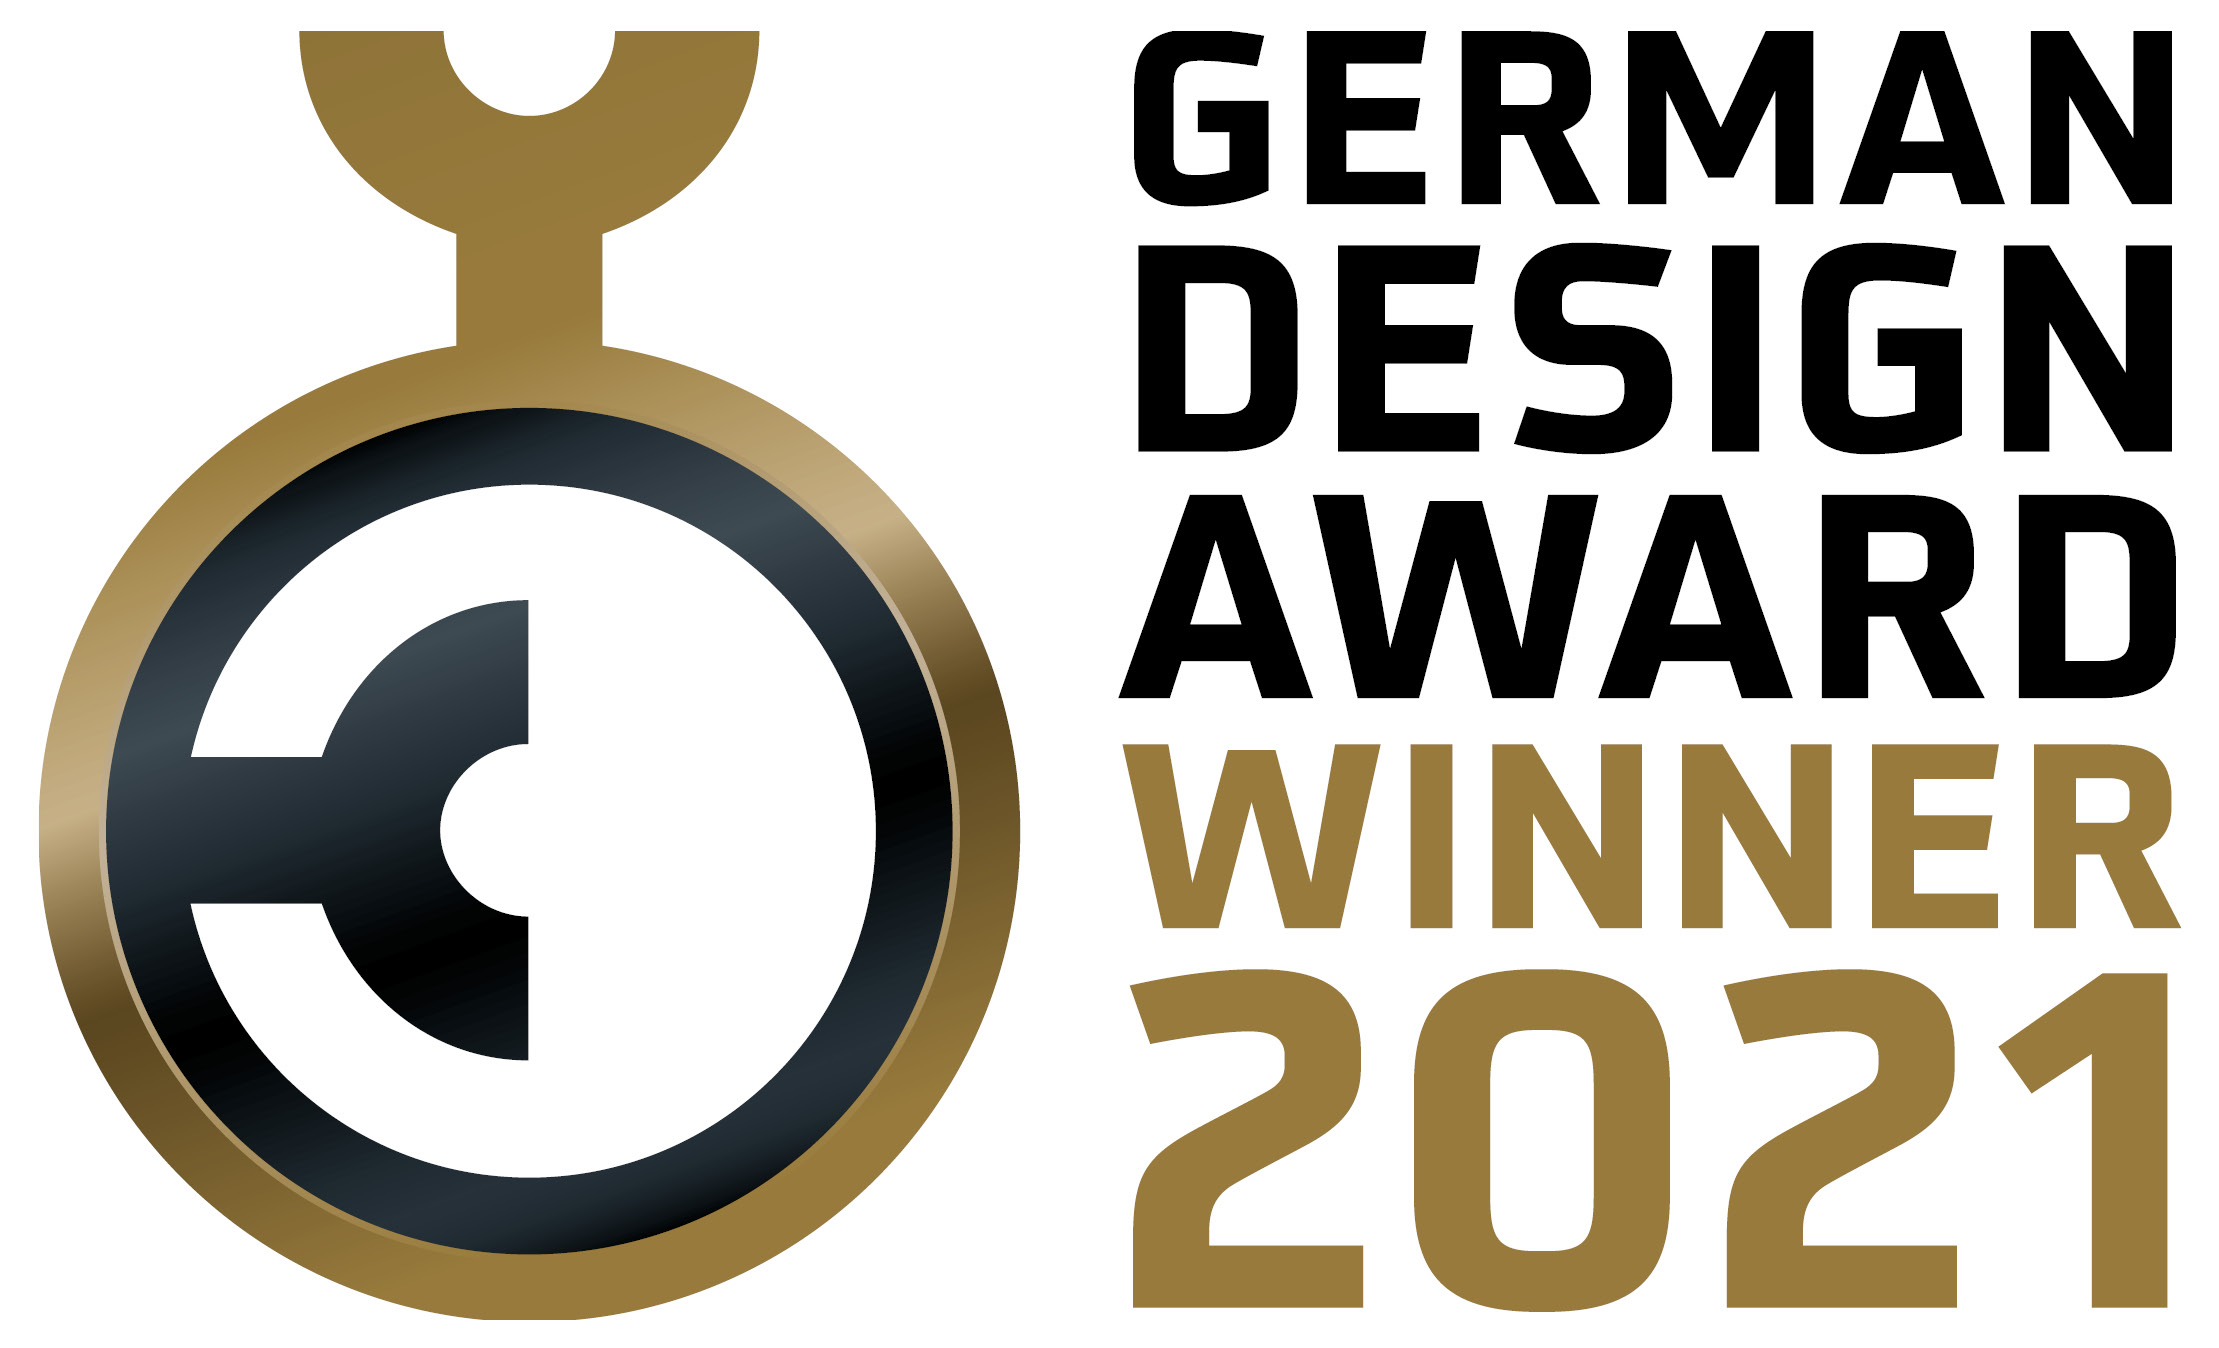 German Design Award Winner 2021 - 